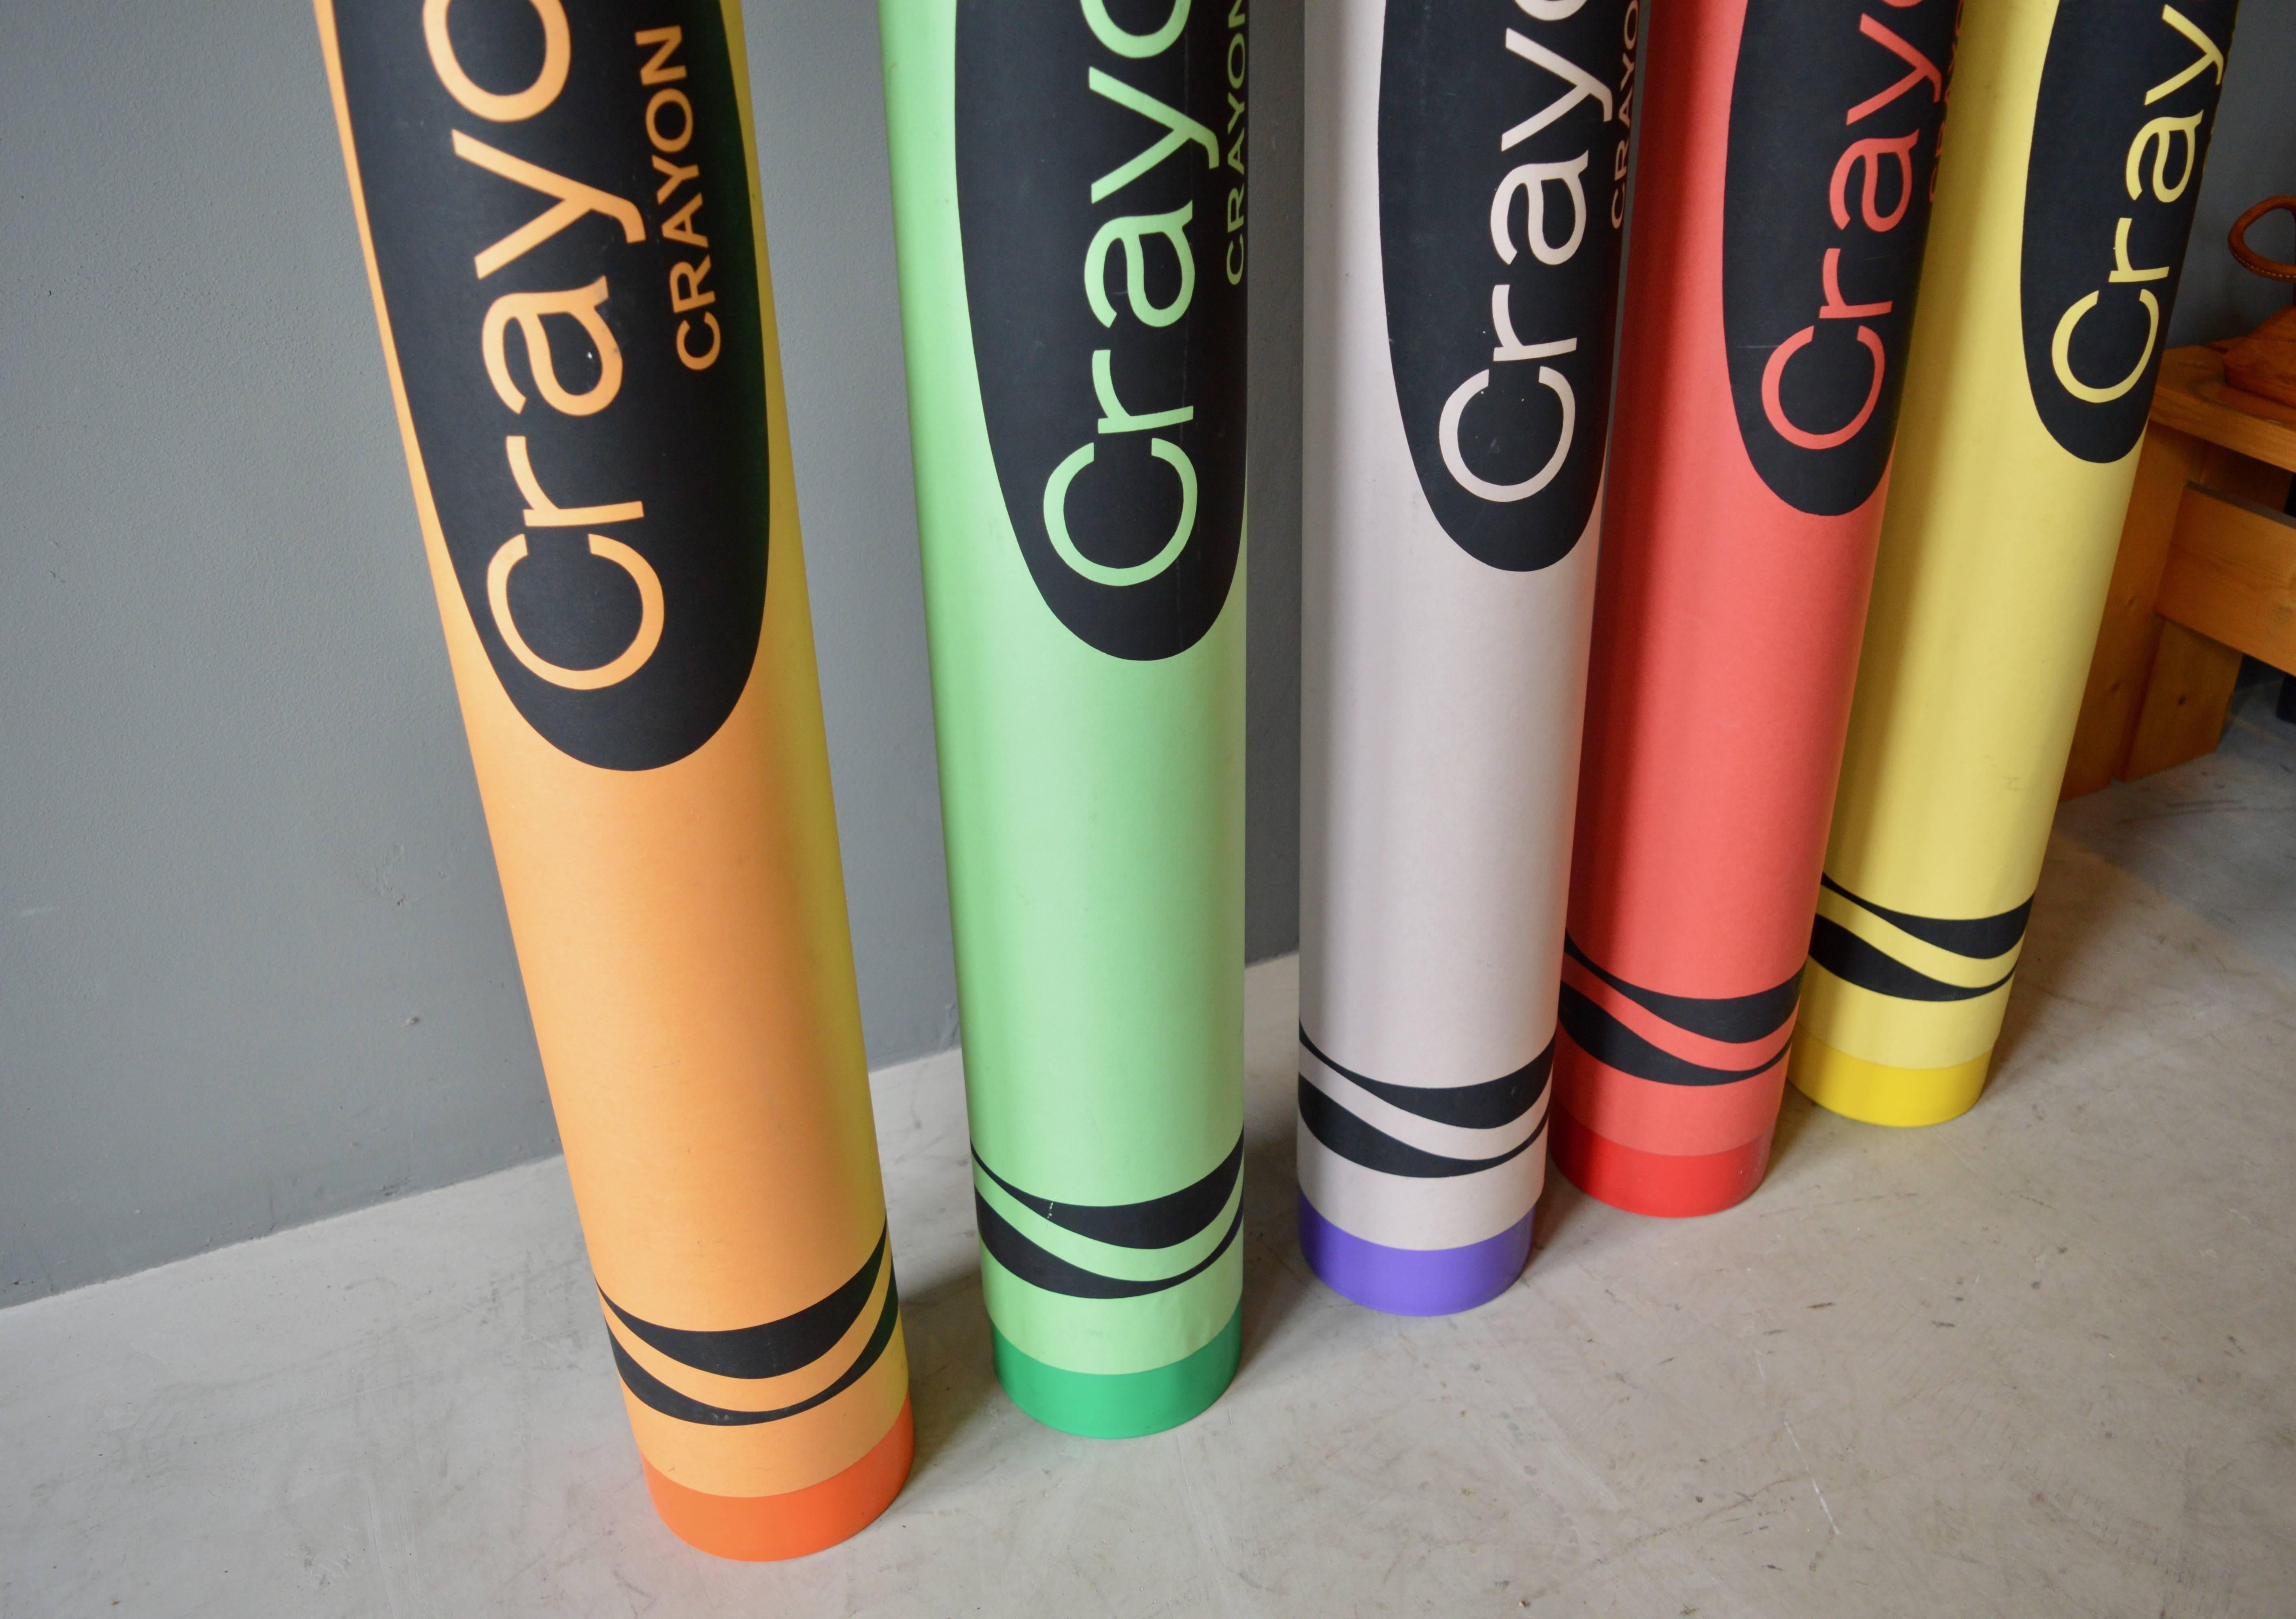 Ensemble monumental de cinq crayons Crayola Excellent état à Los Angeles, CA